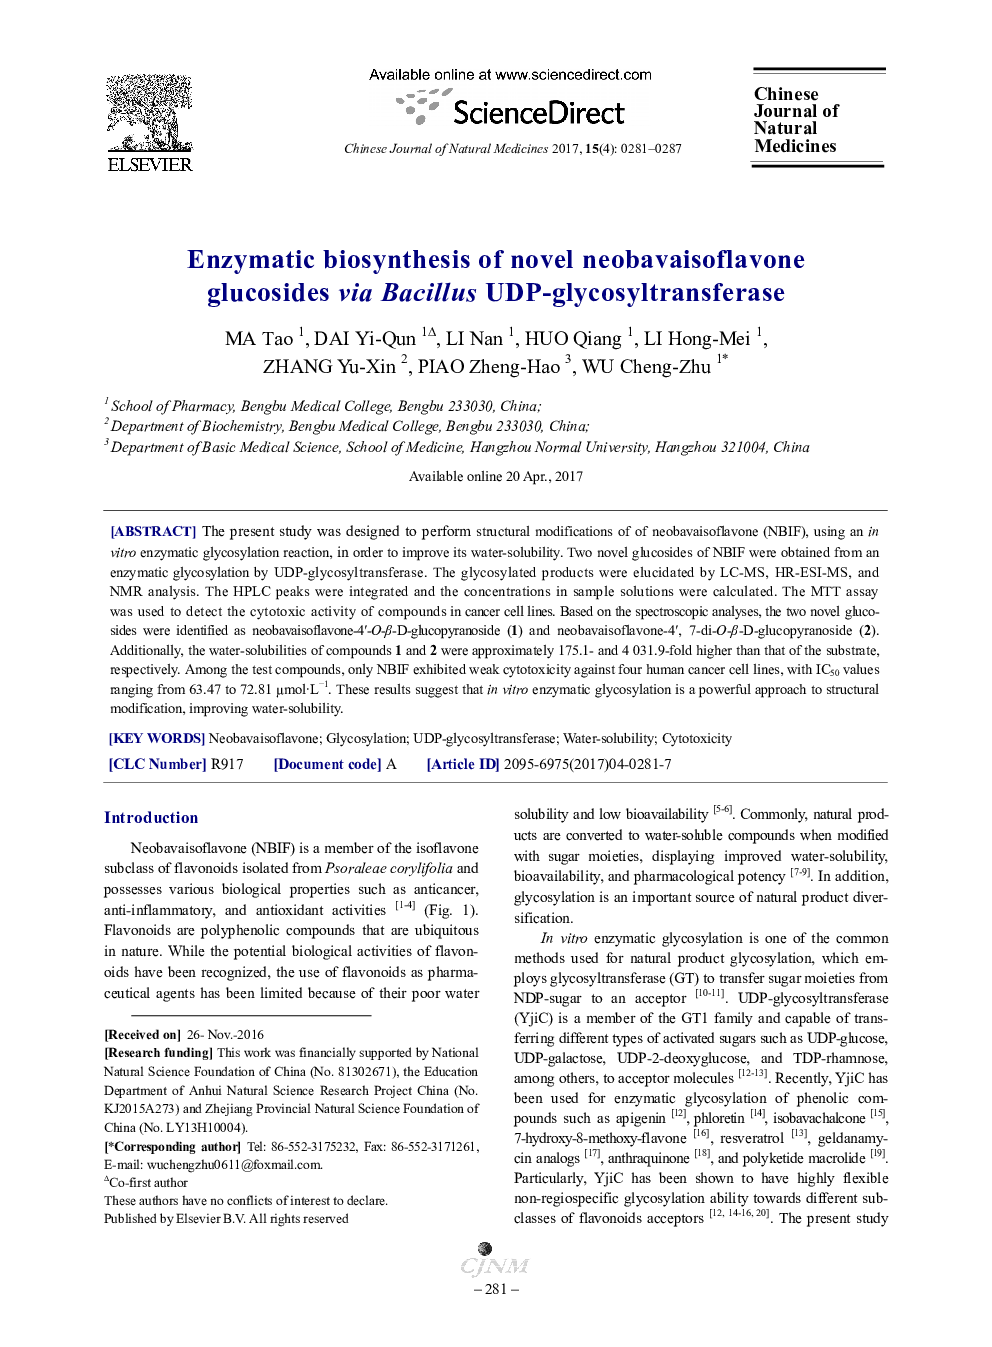 Enzymatic biosynthesis of novel neobavaisoflavone glucosides via Bacillus UDP-glycosyltransferase